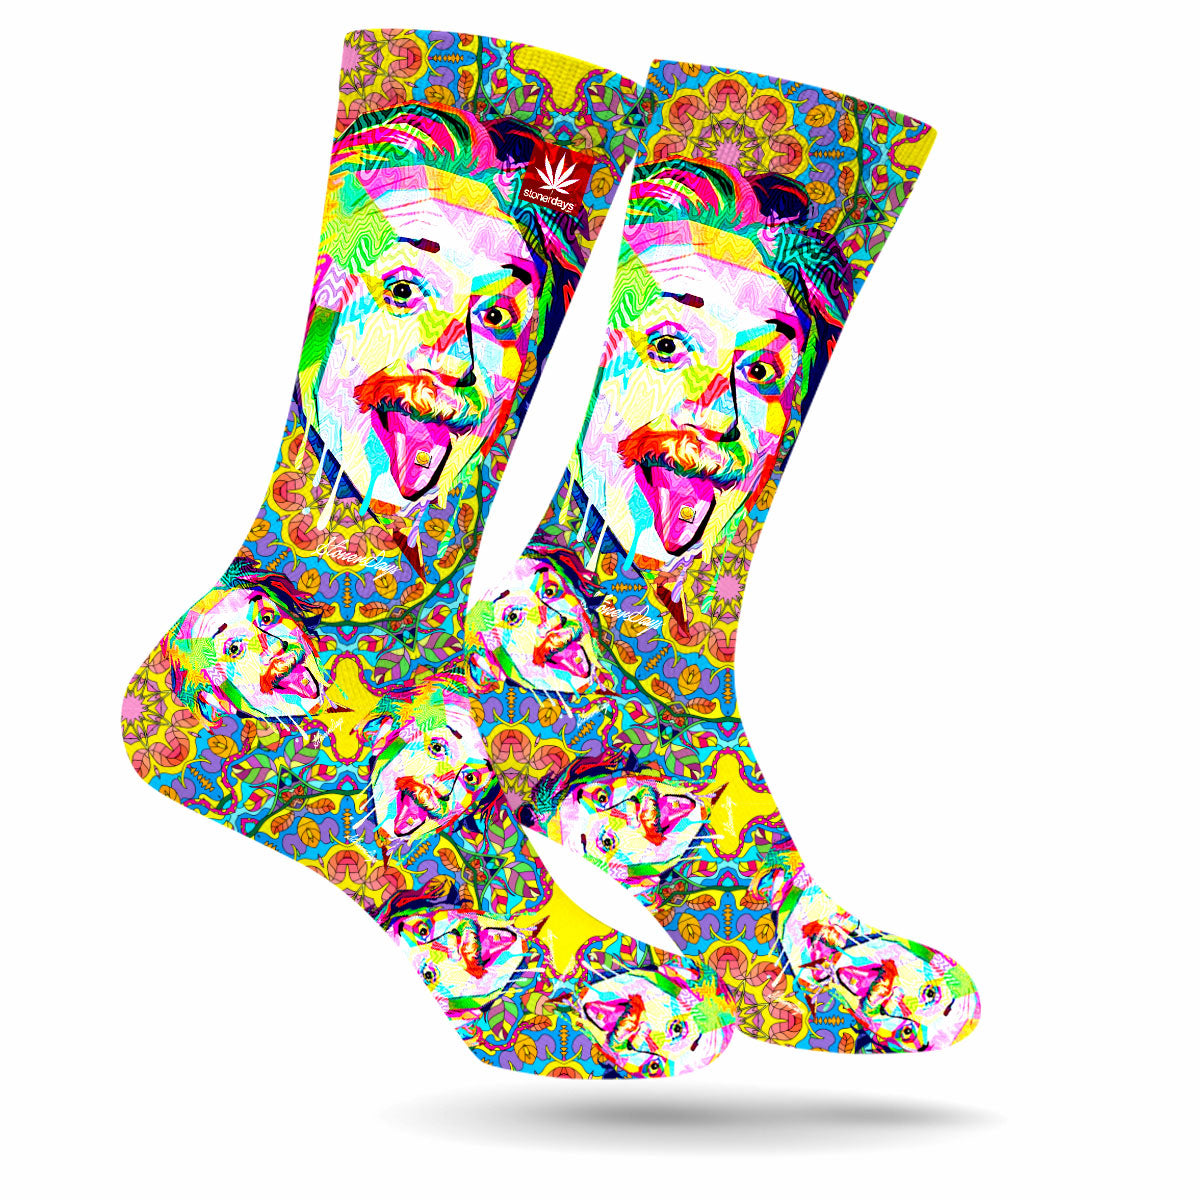 StonerDays Einstein Pop Art Cannabis Socks in vibrant colors, front view on white background